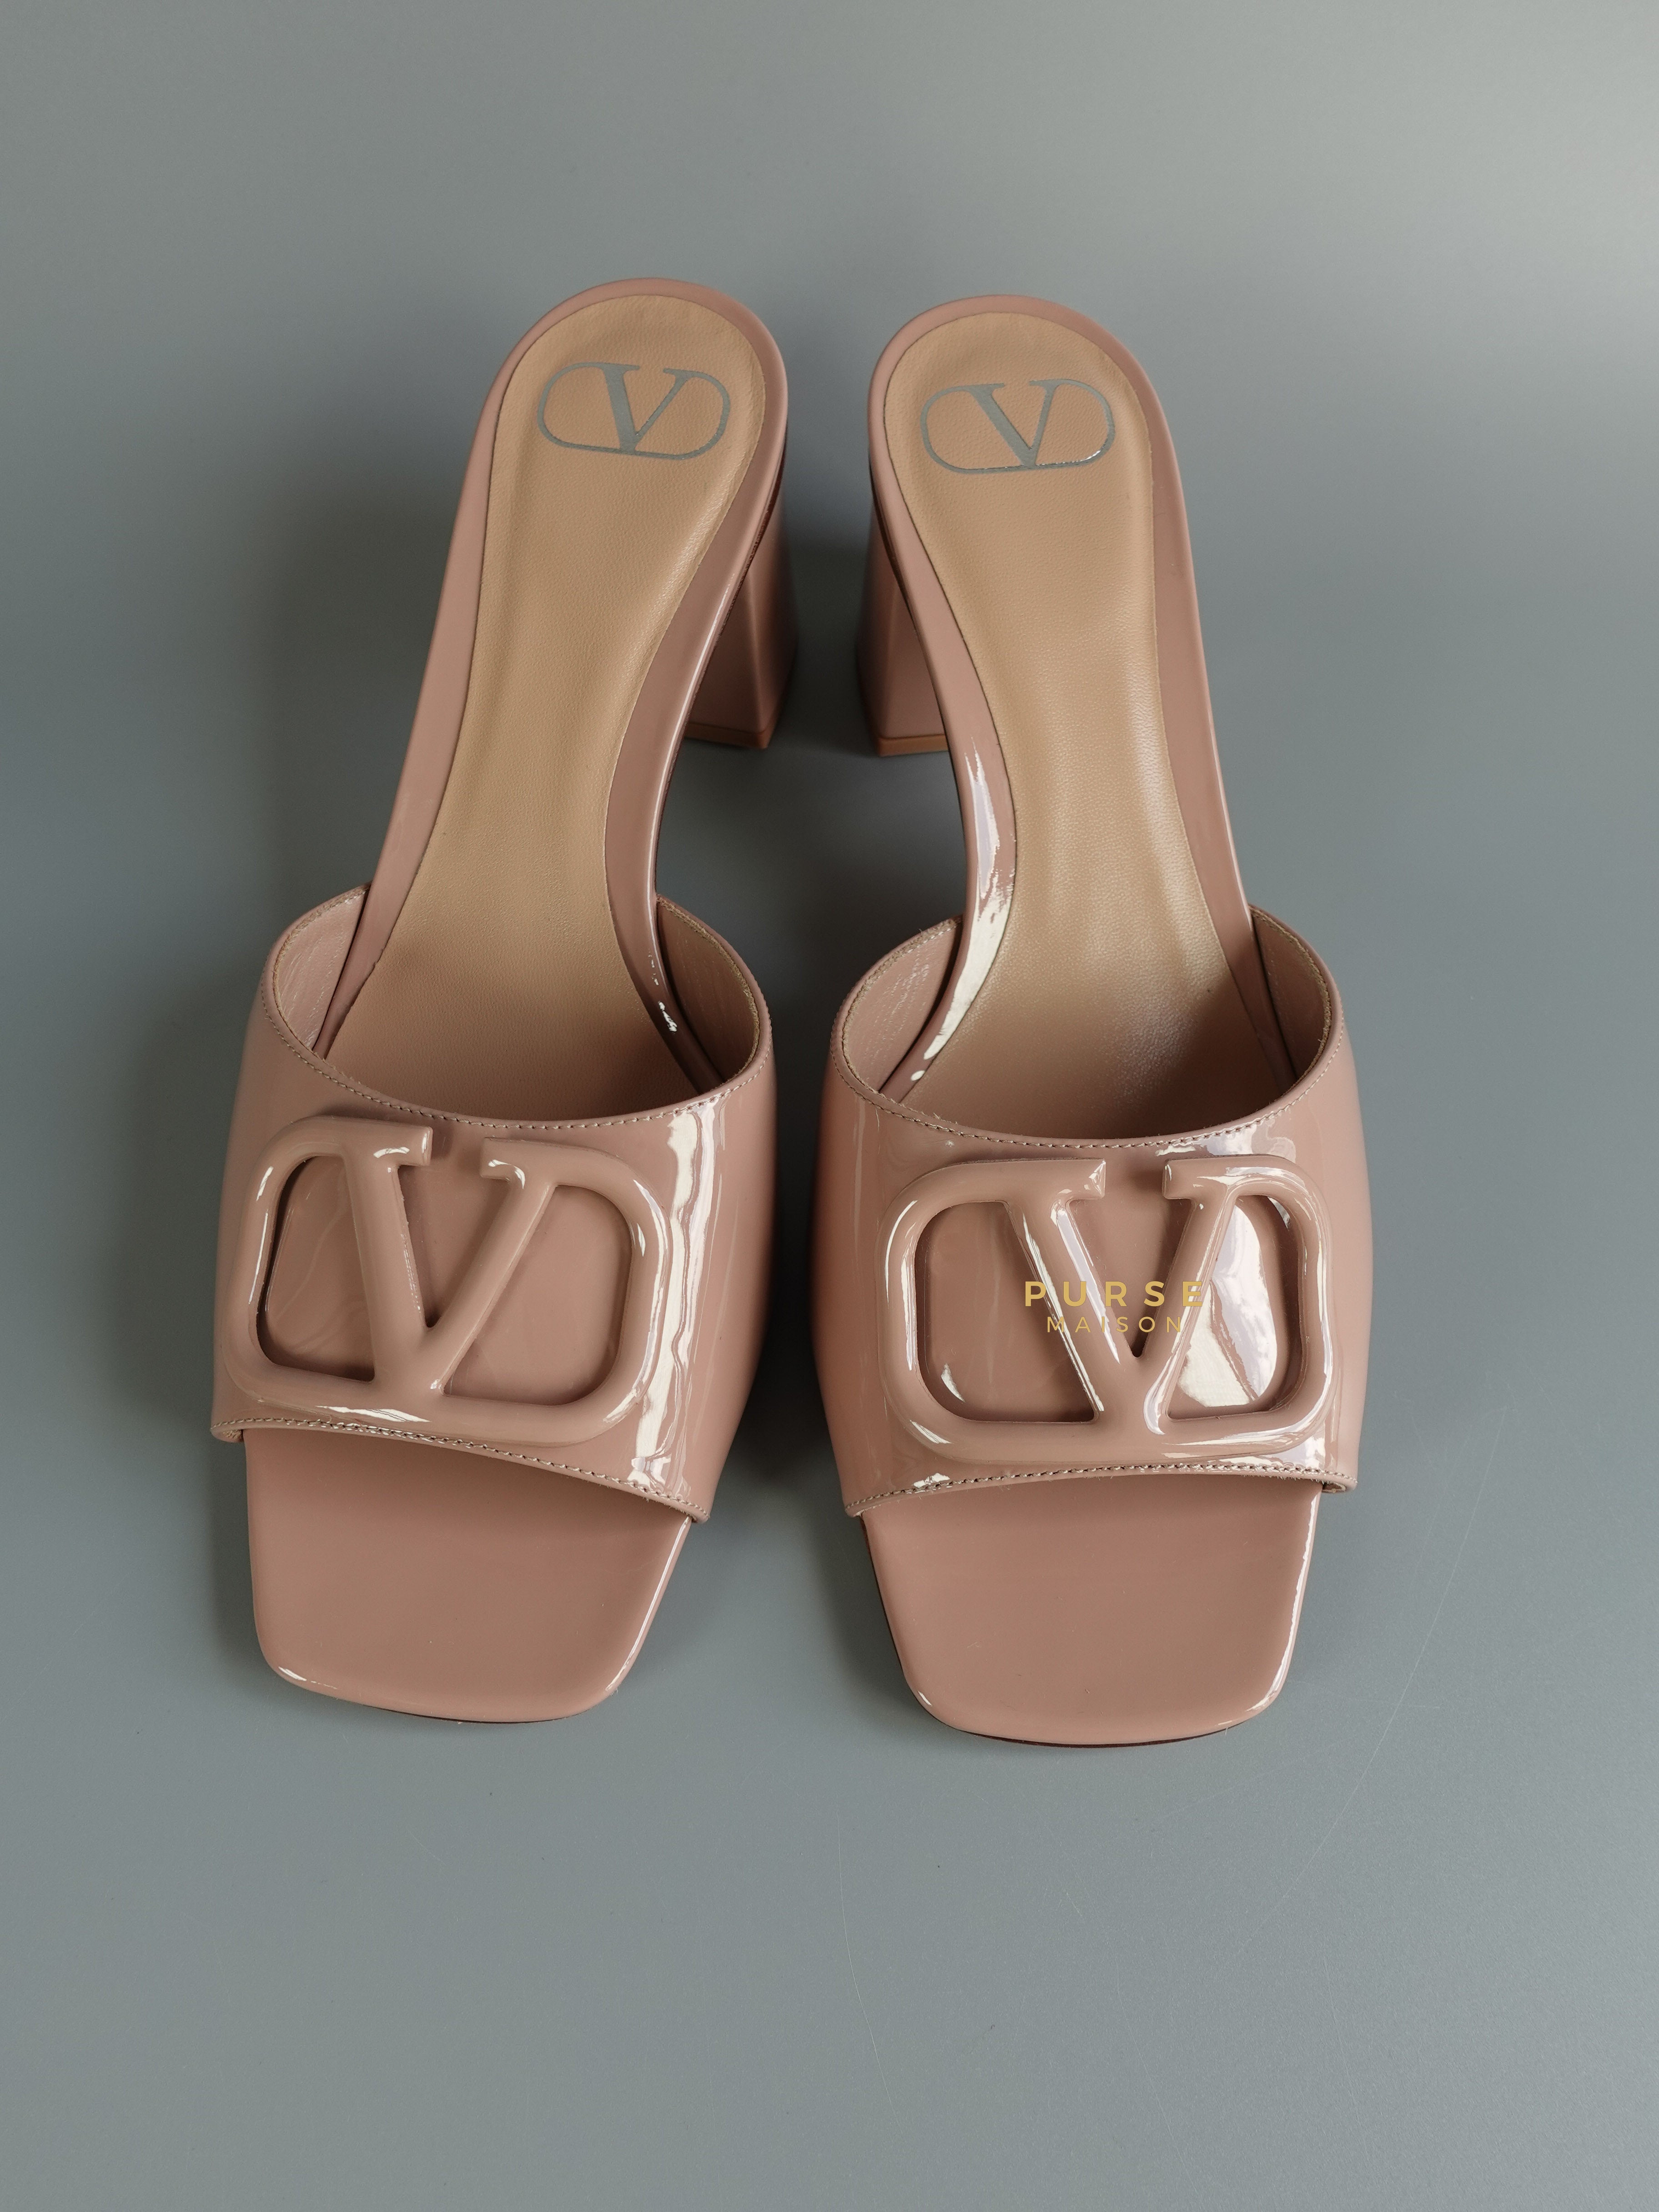 Valentino Garavani Beige Leather VLogo Heeled Sandals Size 38.5 EU | Purse Maison Luxury Bags Shop